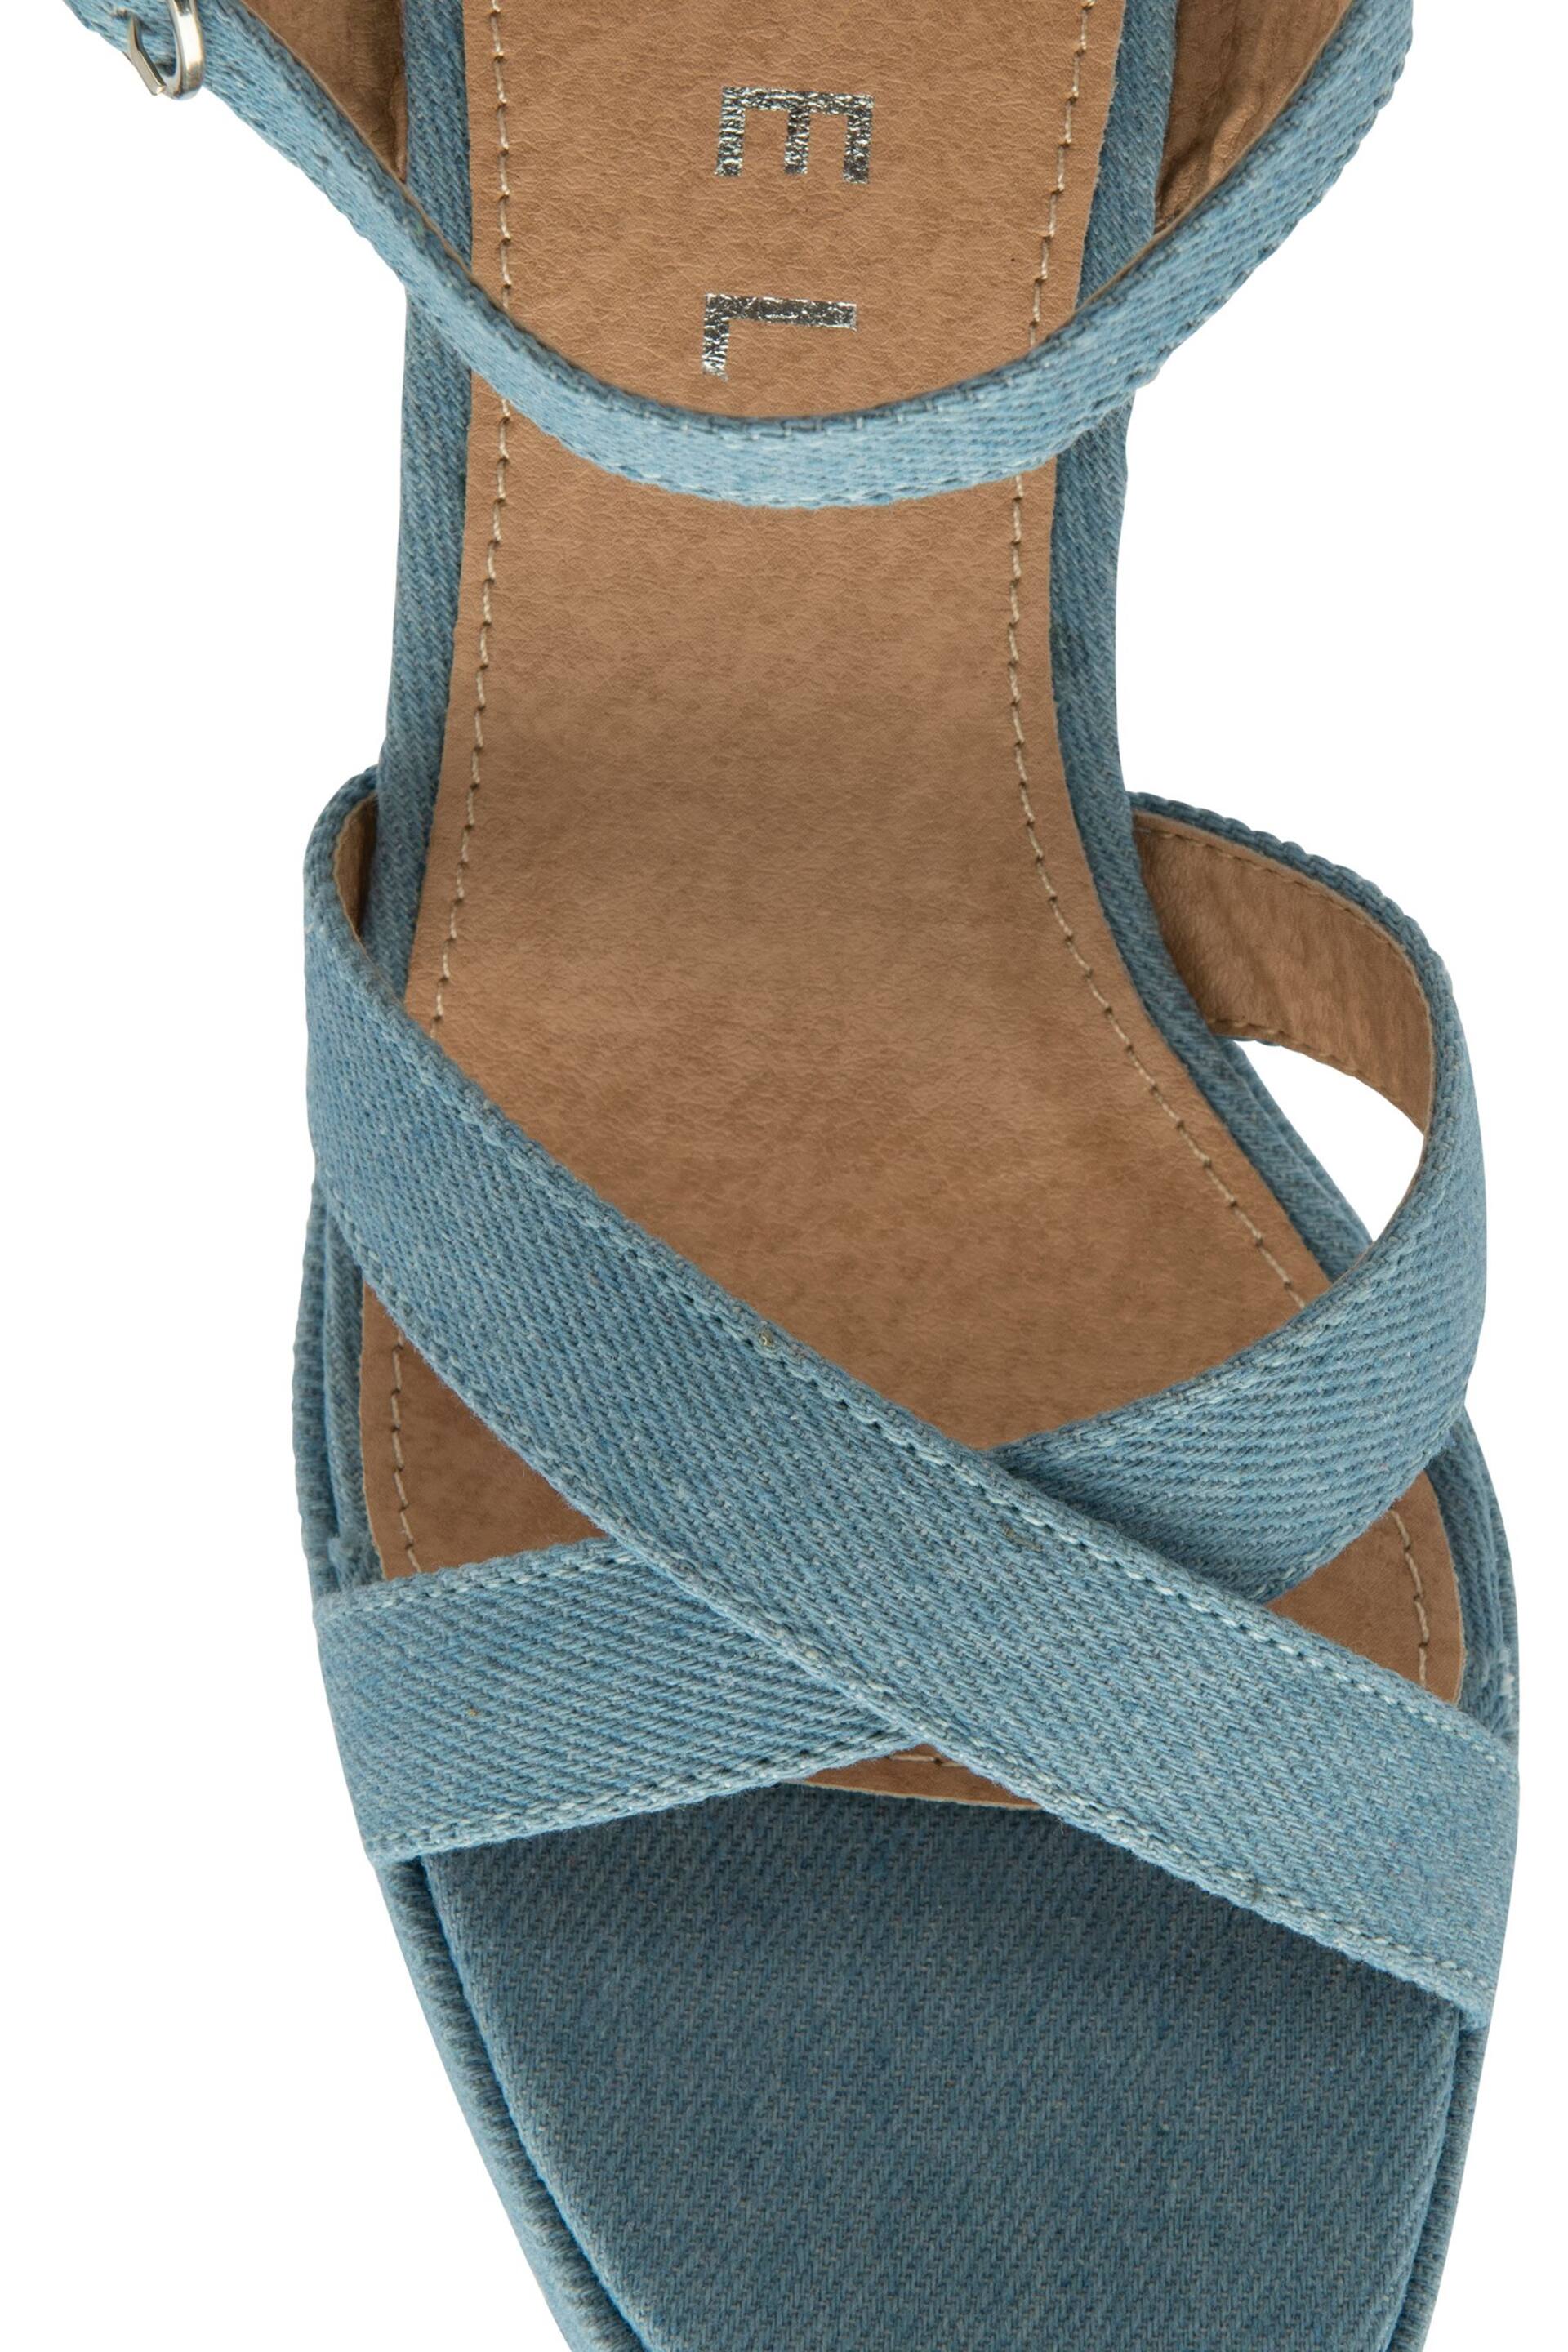 Ravel Blue Strappy Platform Sandals With Croc Effect Print Upper - Image 4 of 4